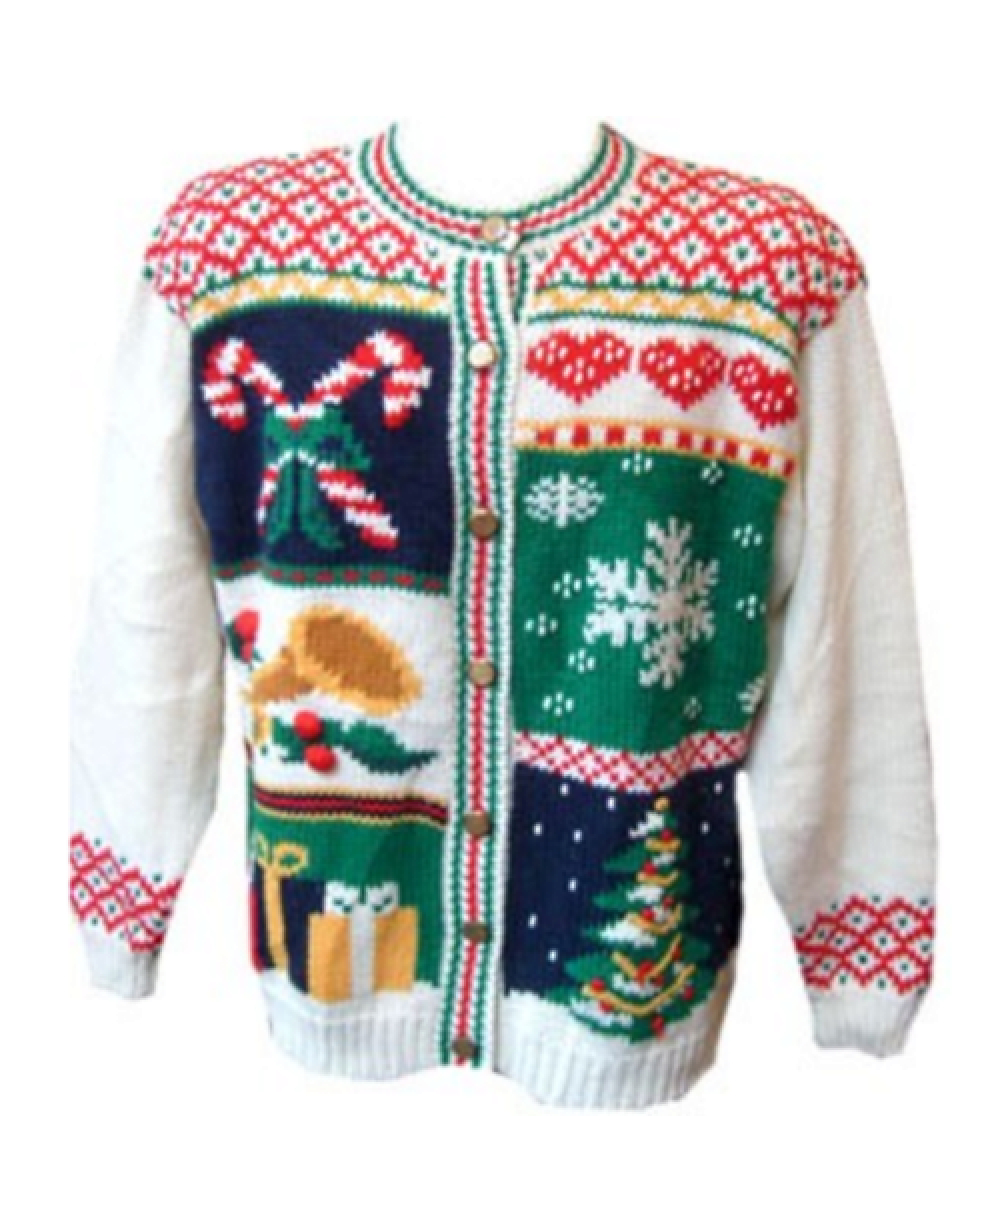 Retro Christmas Jumper Knitting Patterns Vintage Ugly Christmas Sweater Randomly Selected